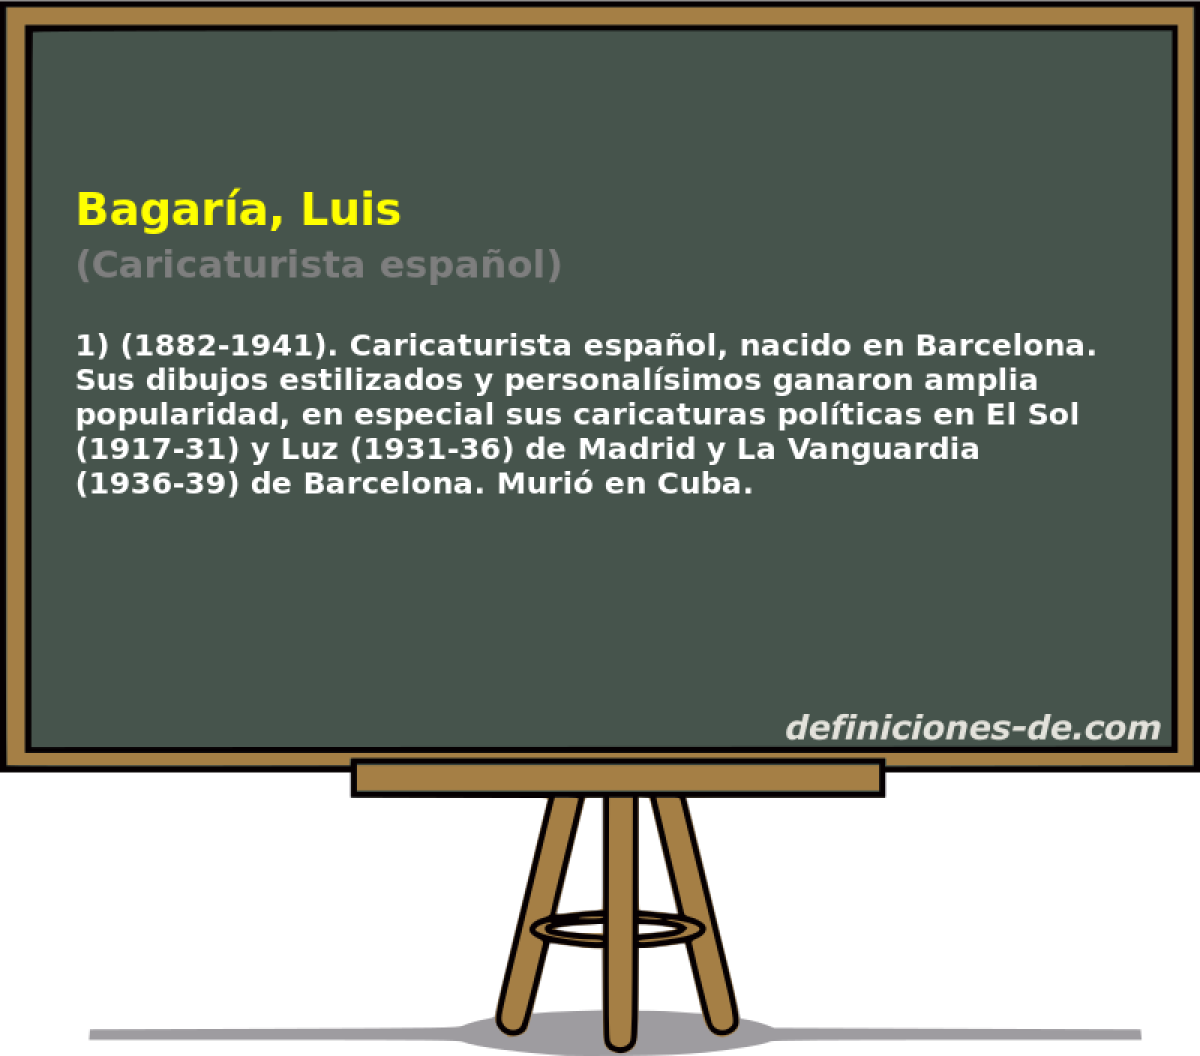 Bagara, Luis (Caricaturista espaol)